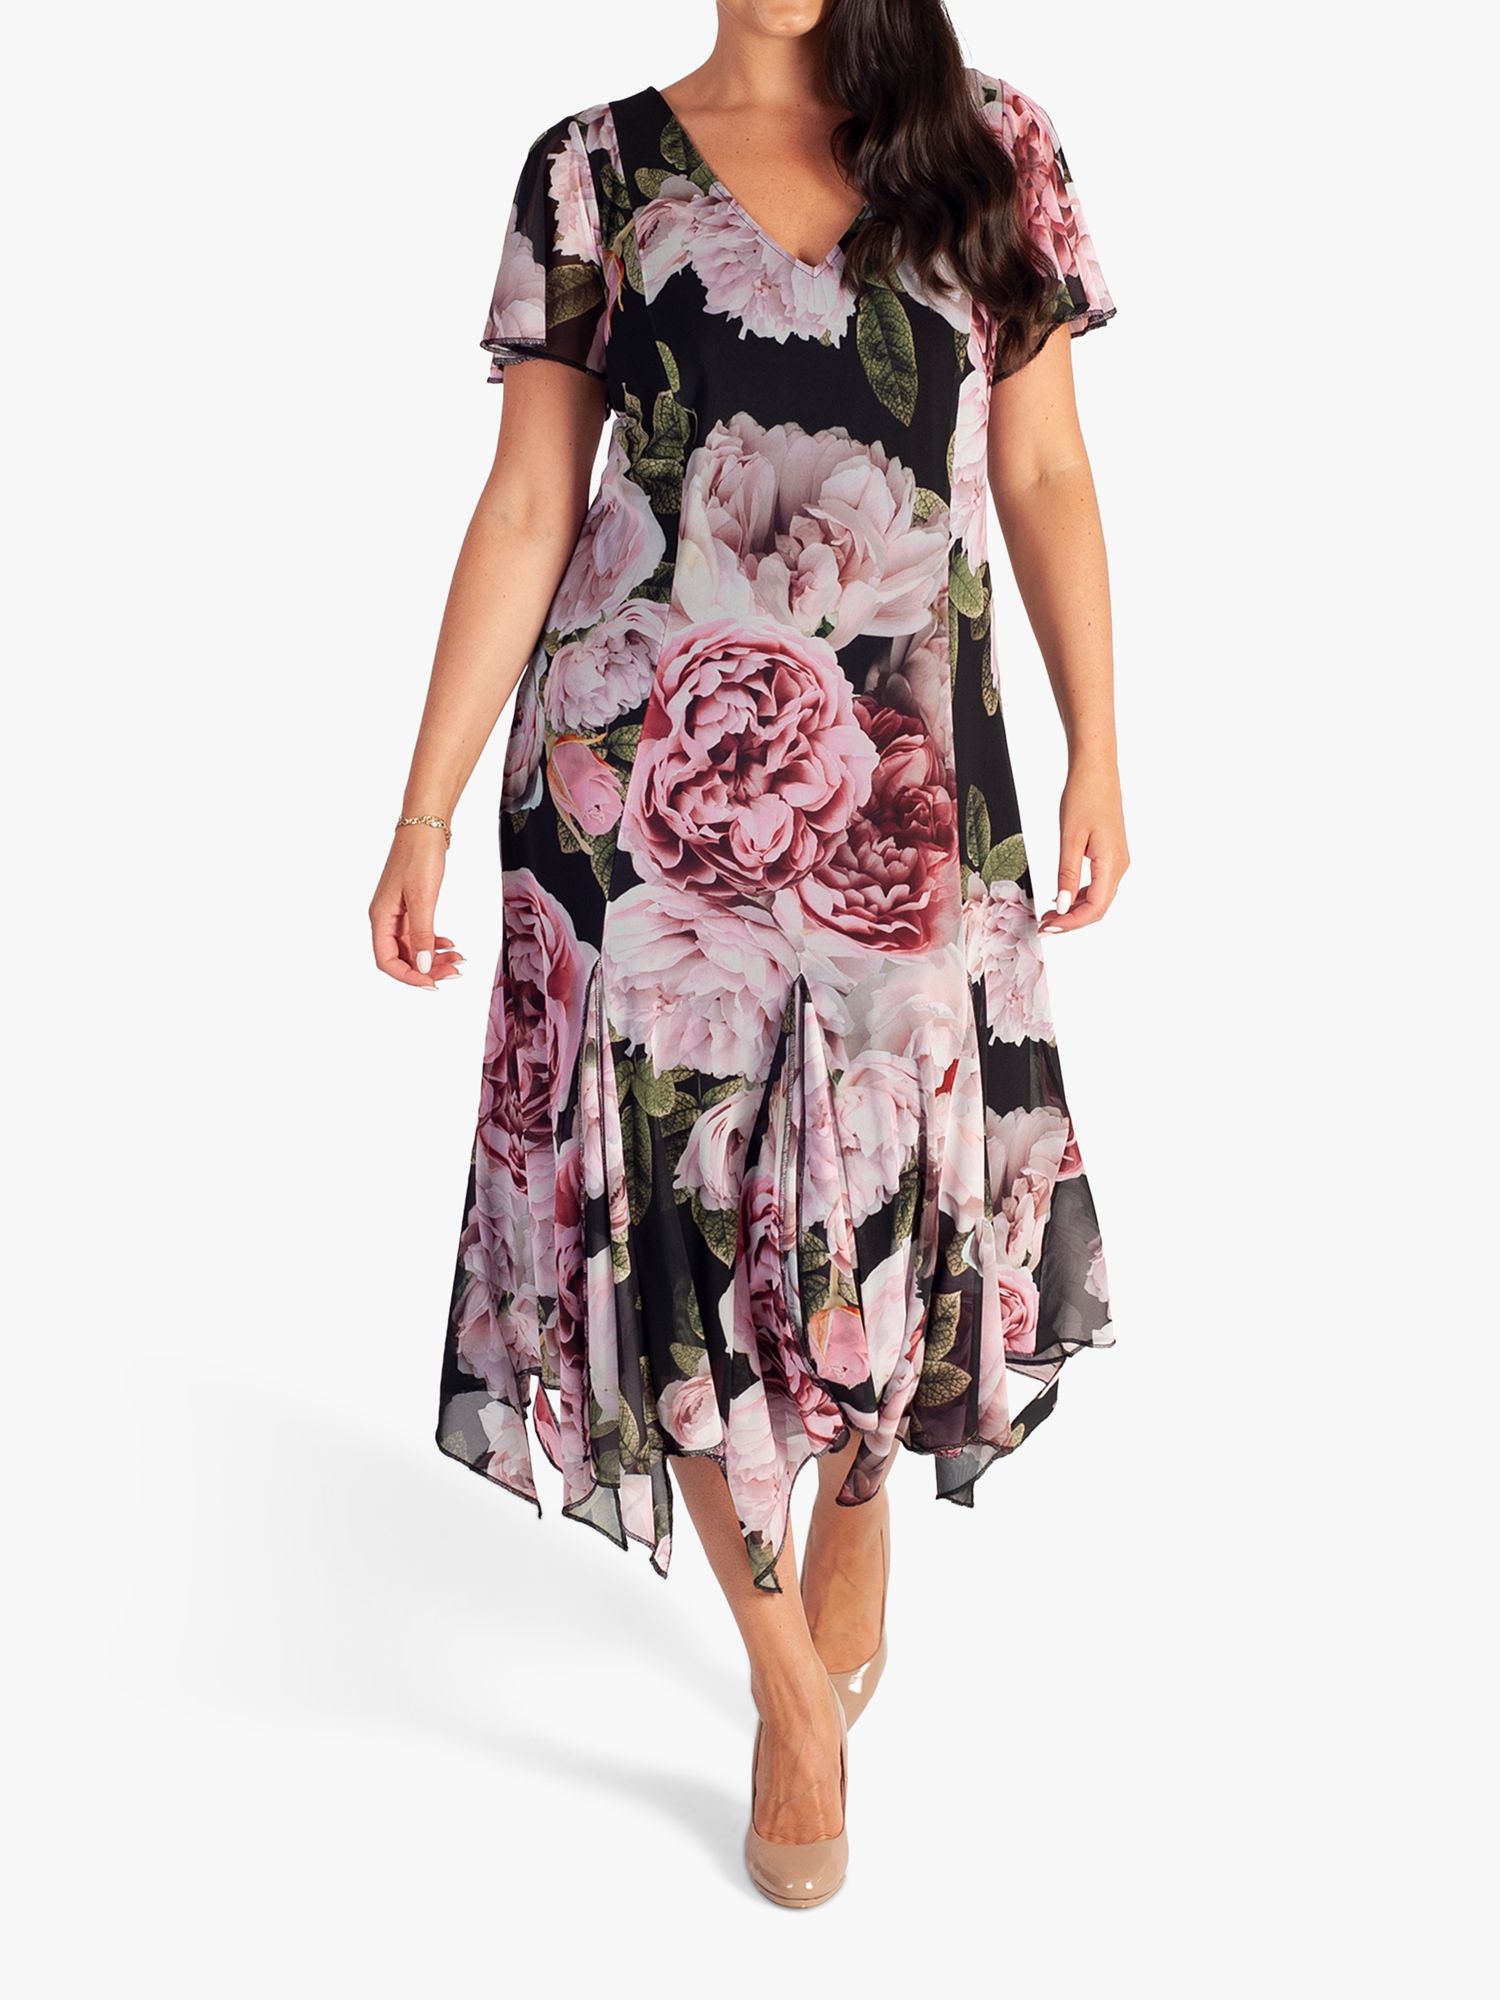 Chesca Curve Autumn Rose Print Dress, Black/Pink